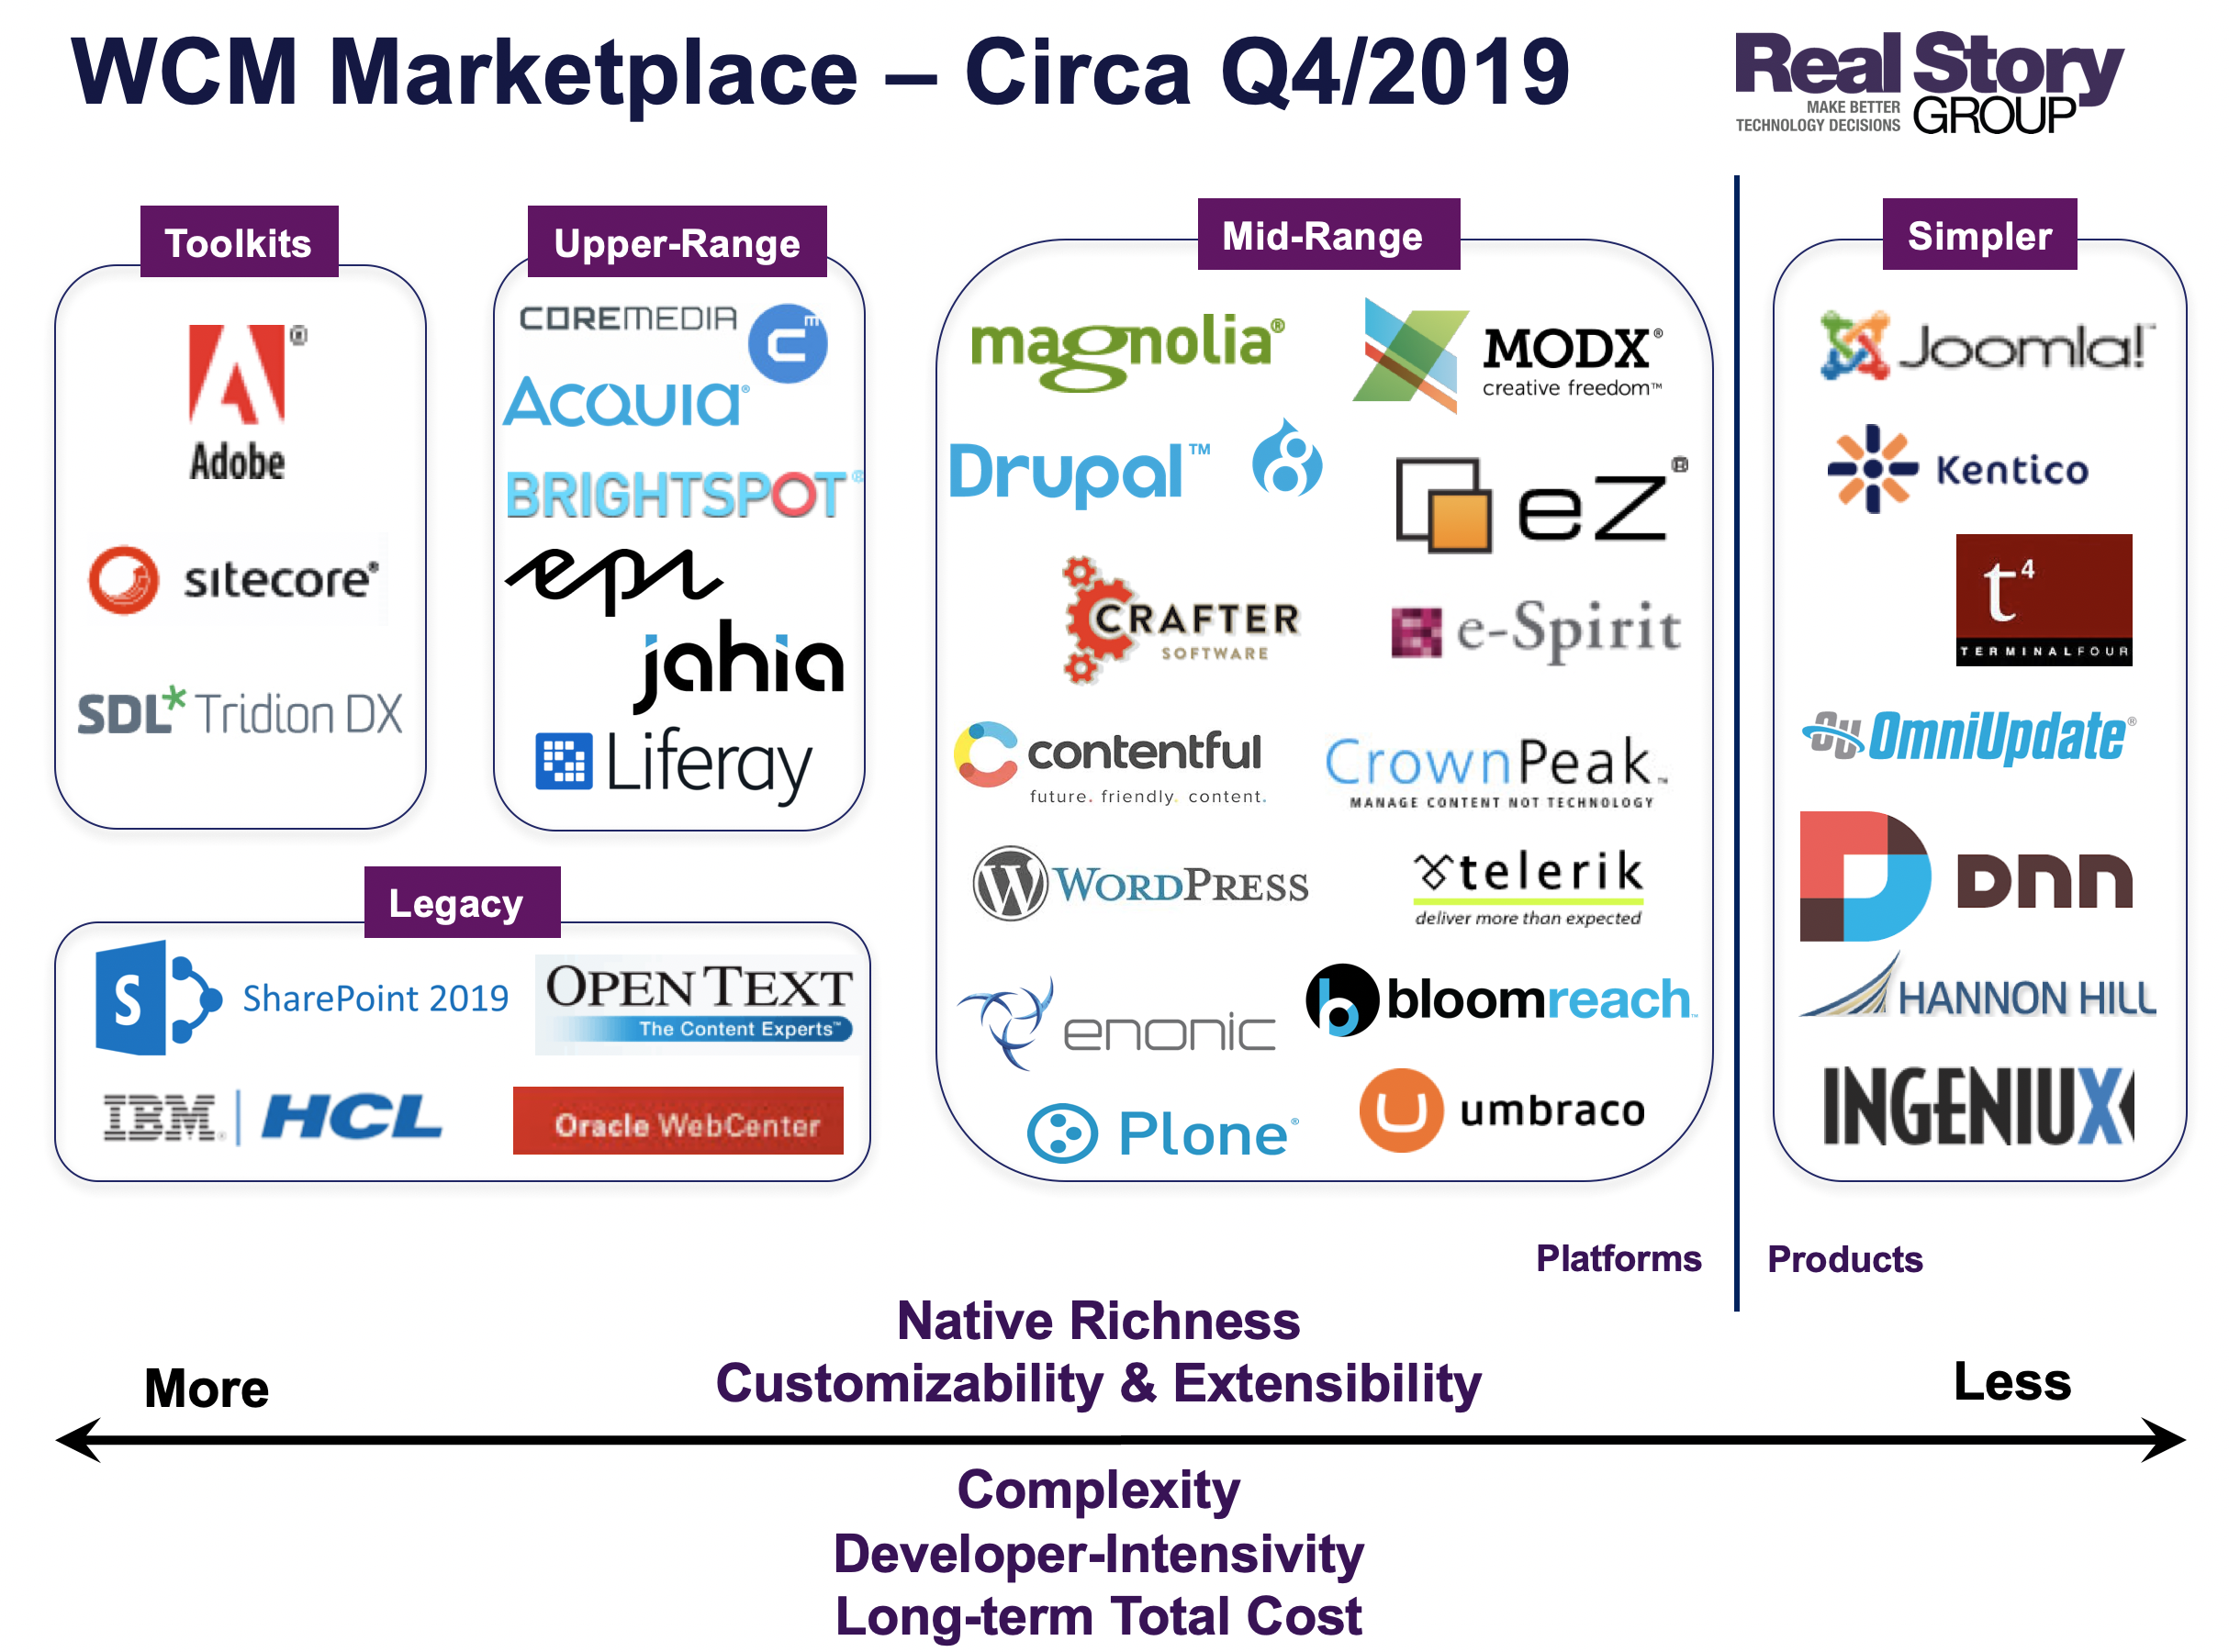 WCM Marketplace According to RSG, Circa 2019